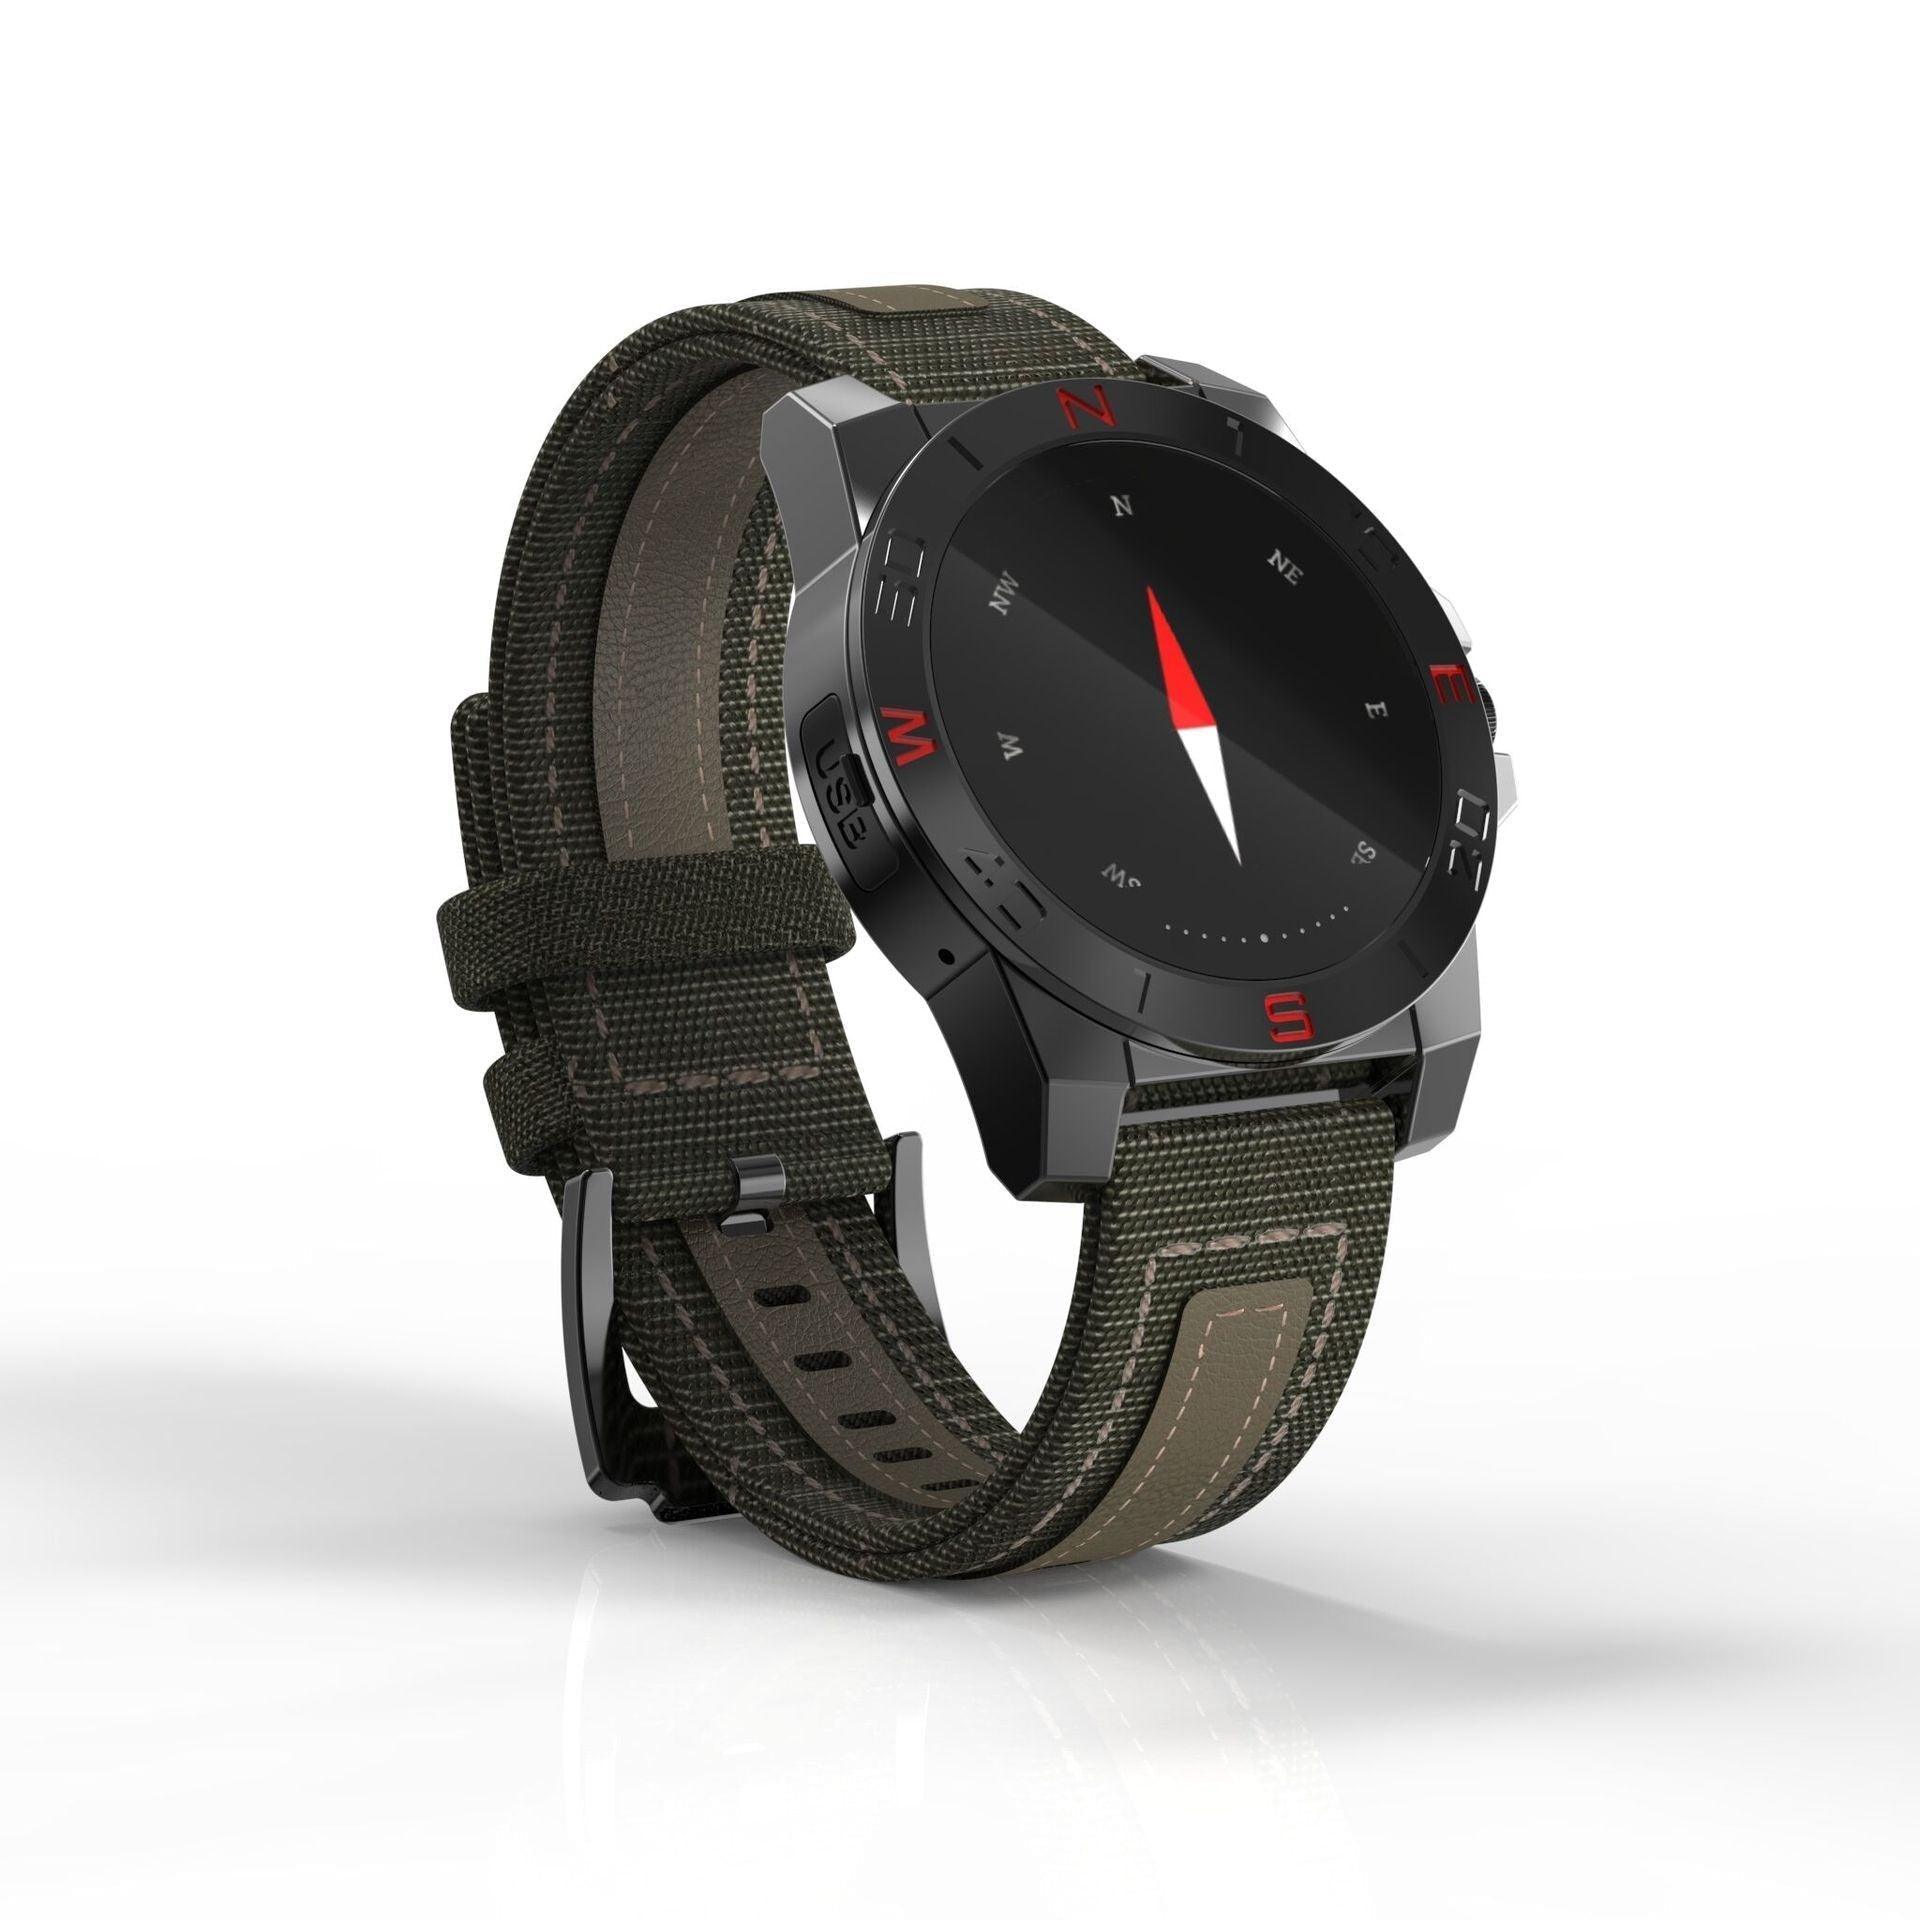 Outdoor exercise light sensor heart rate sleep monitor smart watch - Silvis21 ™